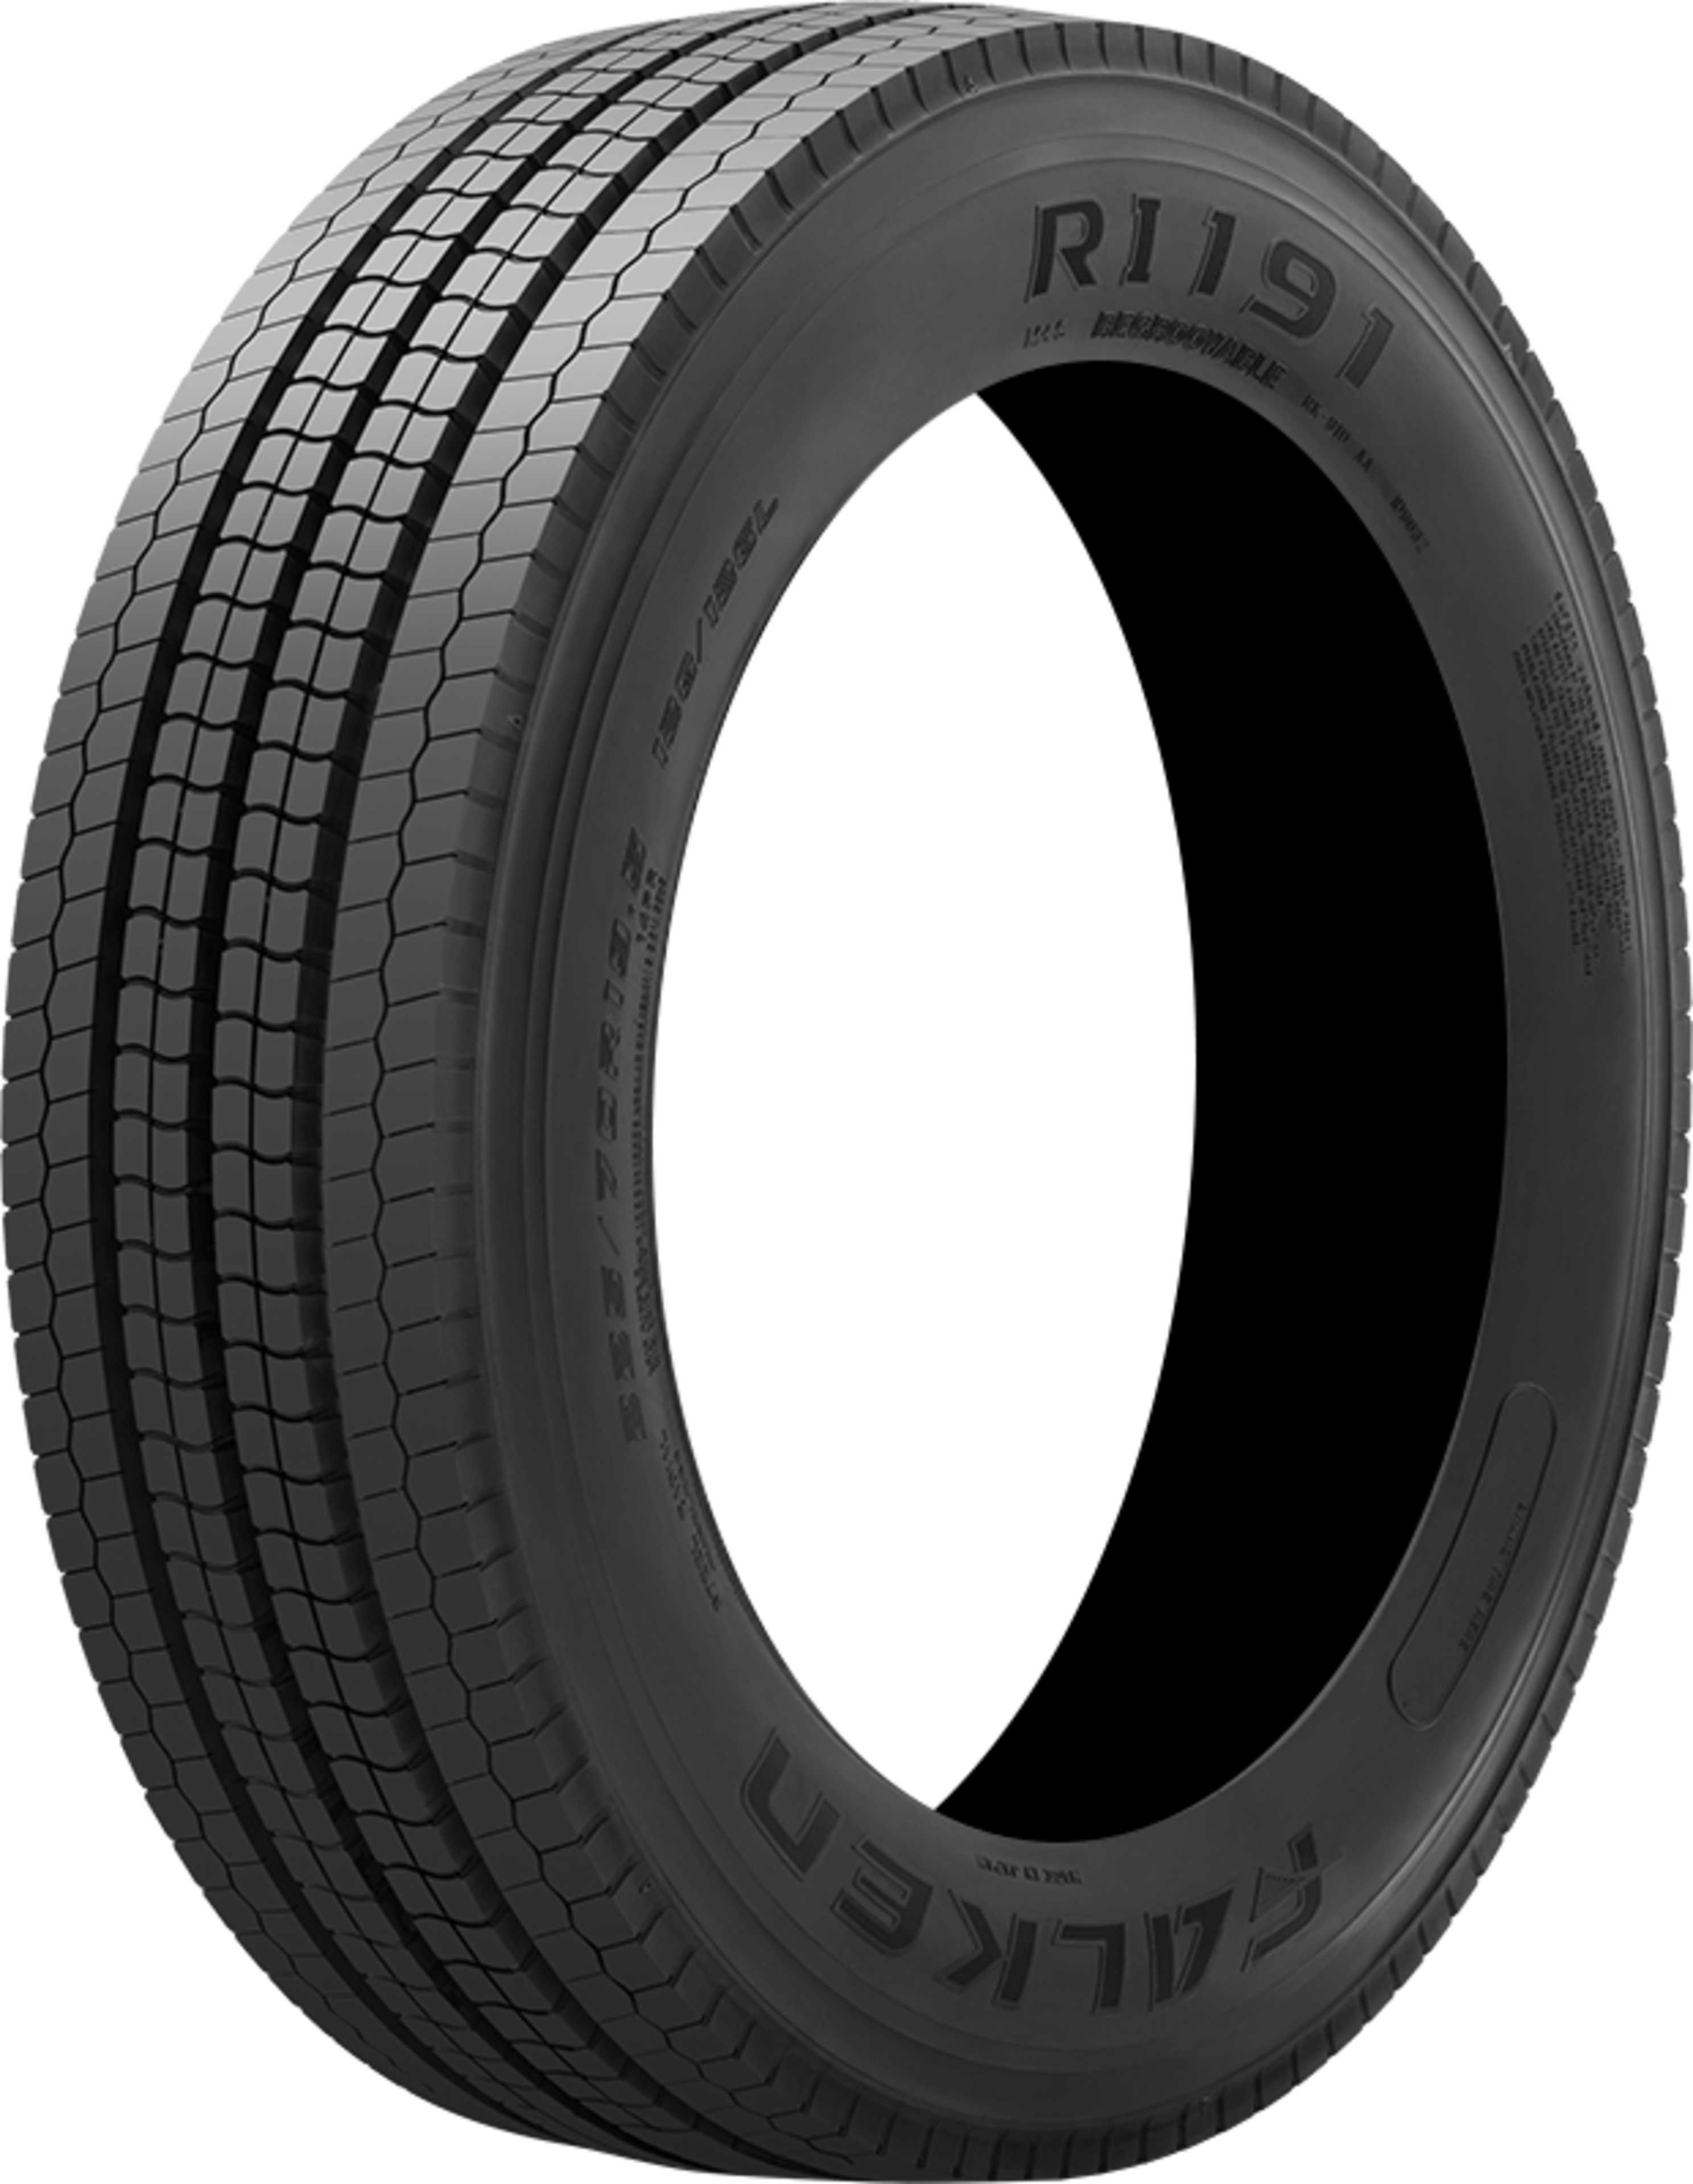 Buy Falken RI191 Tires Online | SimpleTire